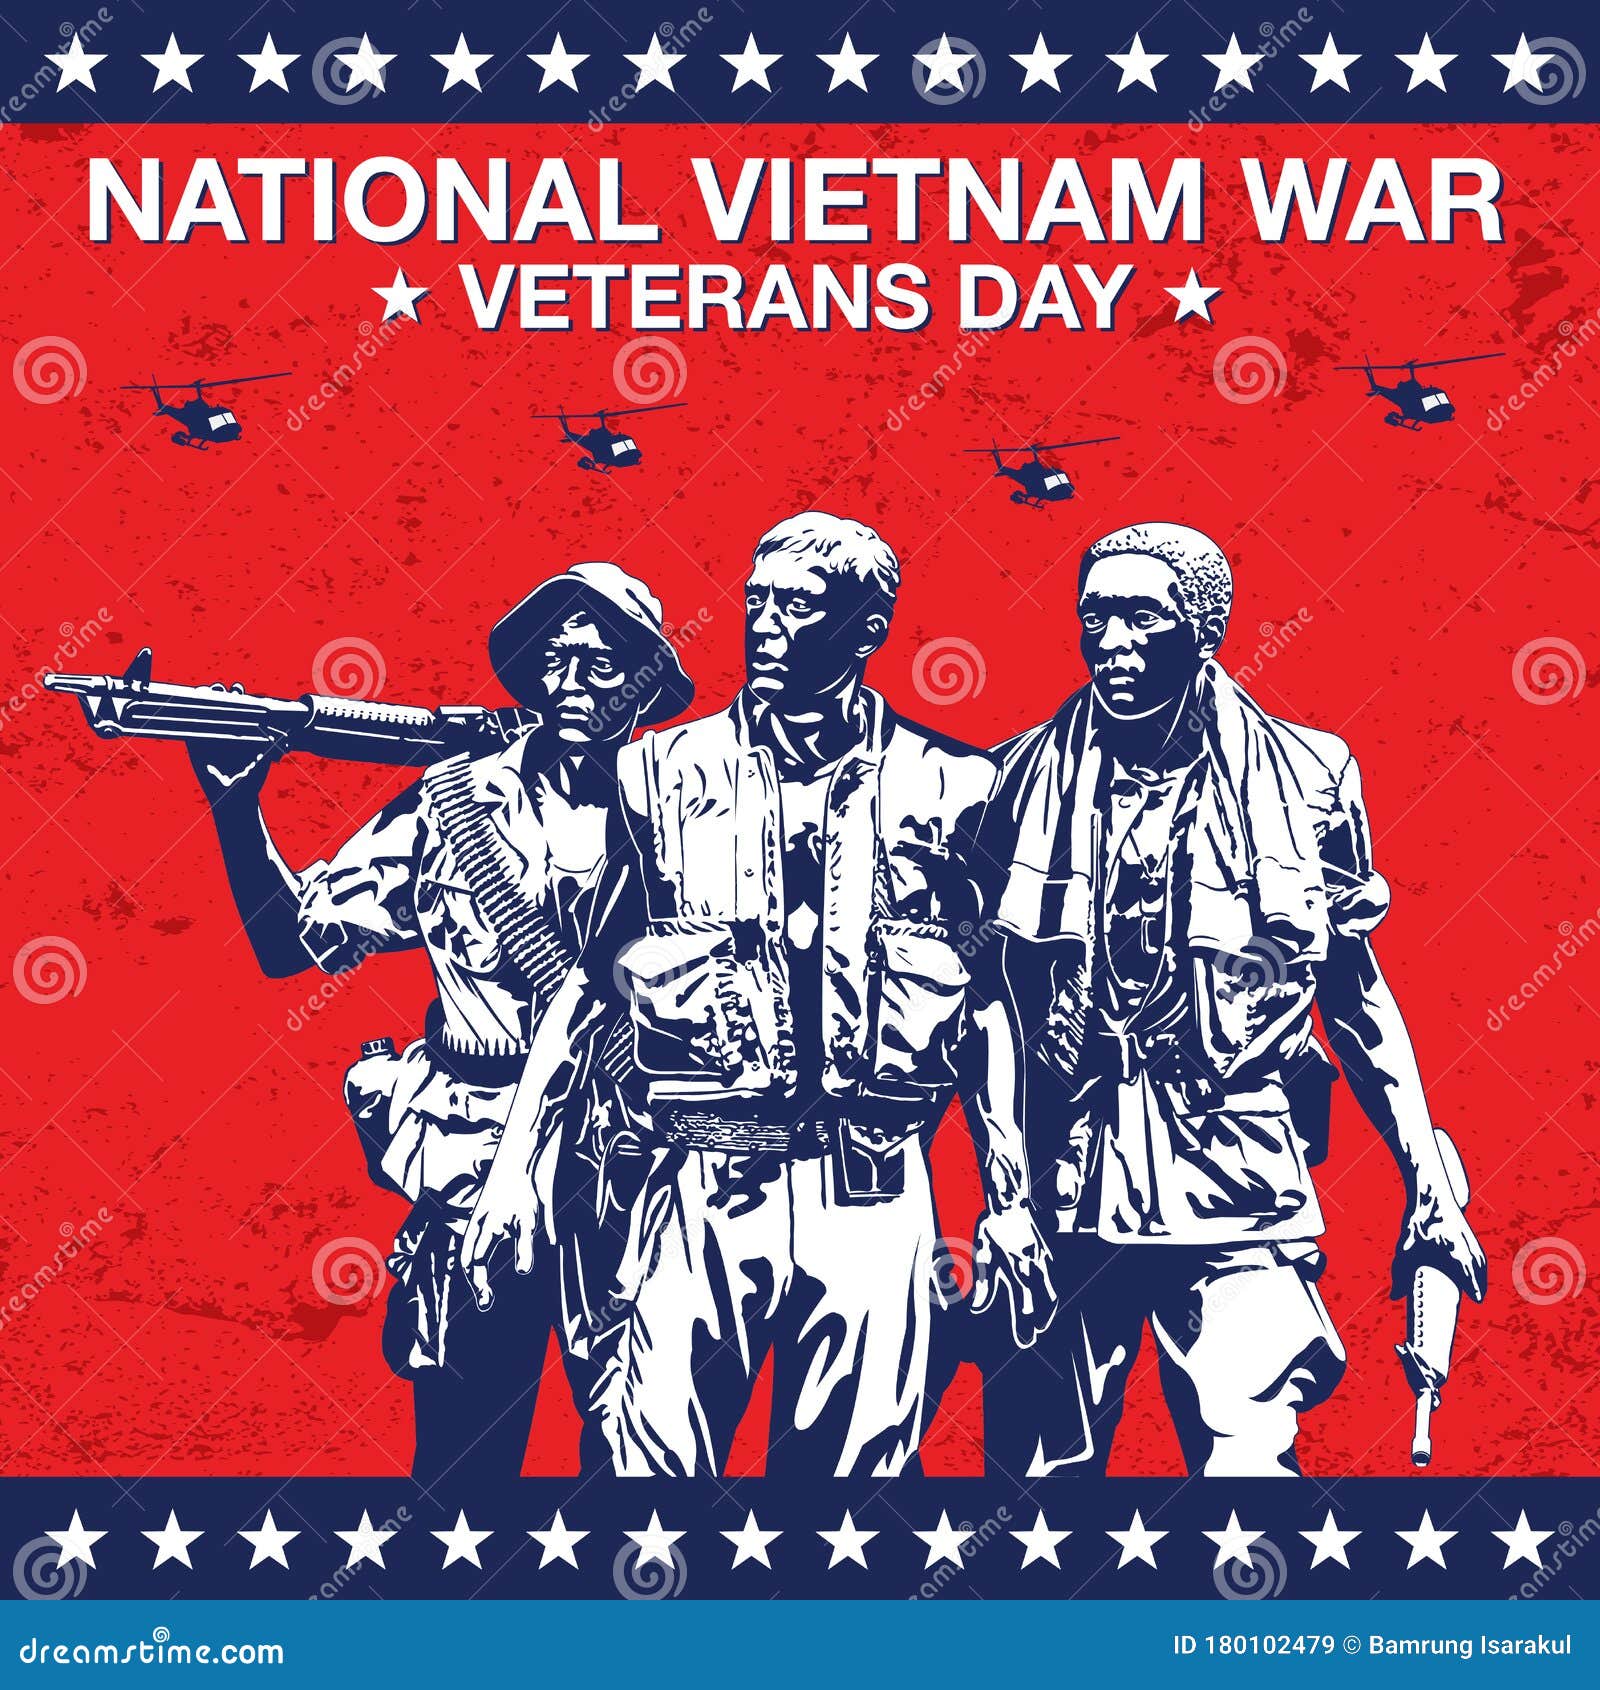 Download National Vietnam War Veterans Day Banner Vector ...